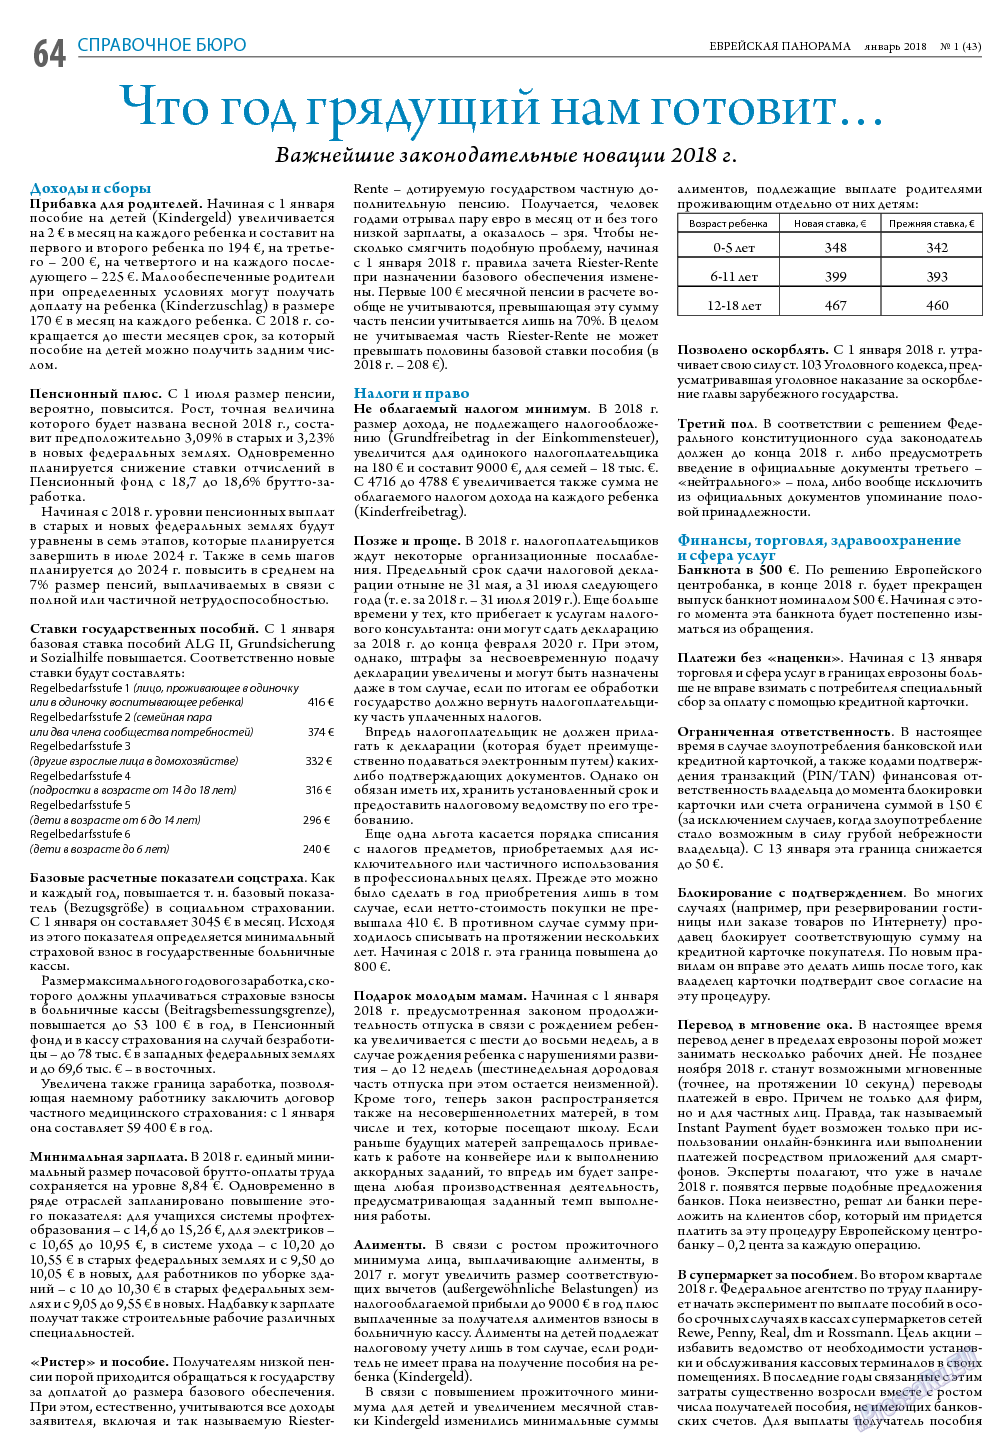 Еврейская панорама, газета. 2018 №1 стр.64